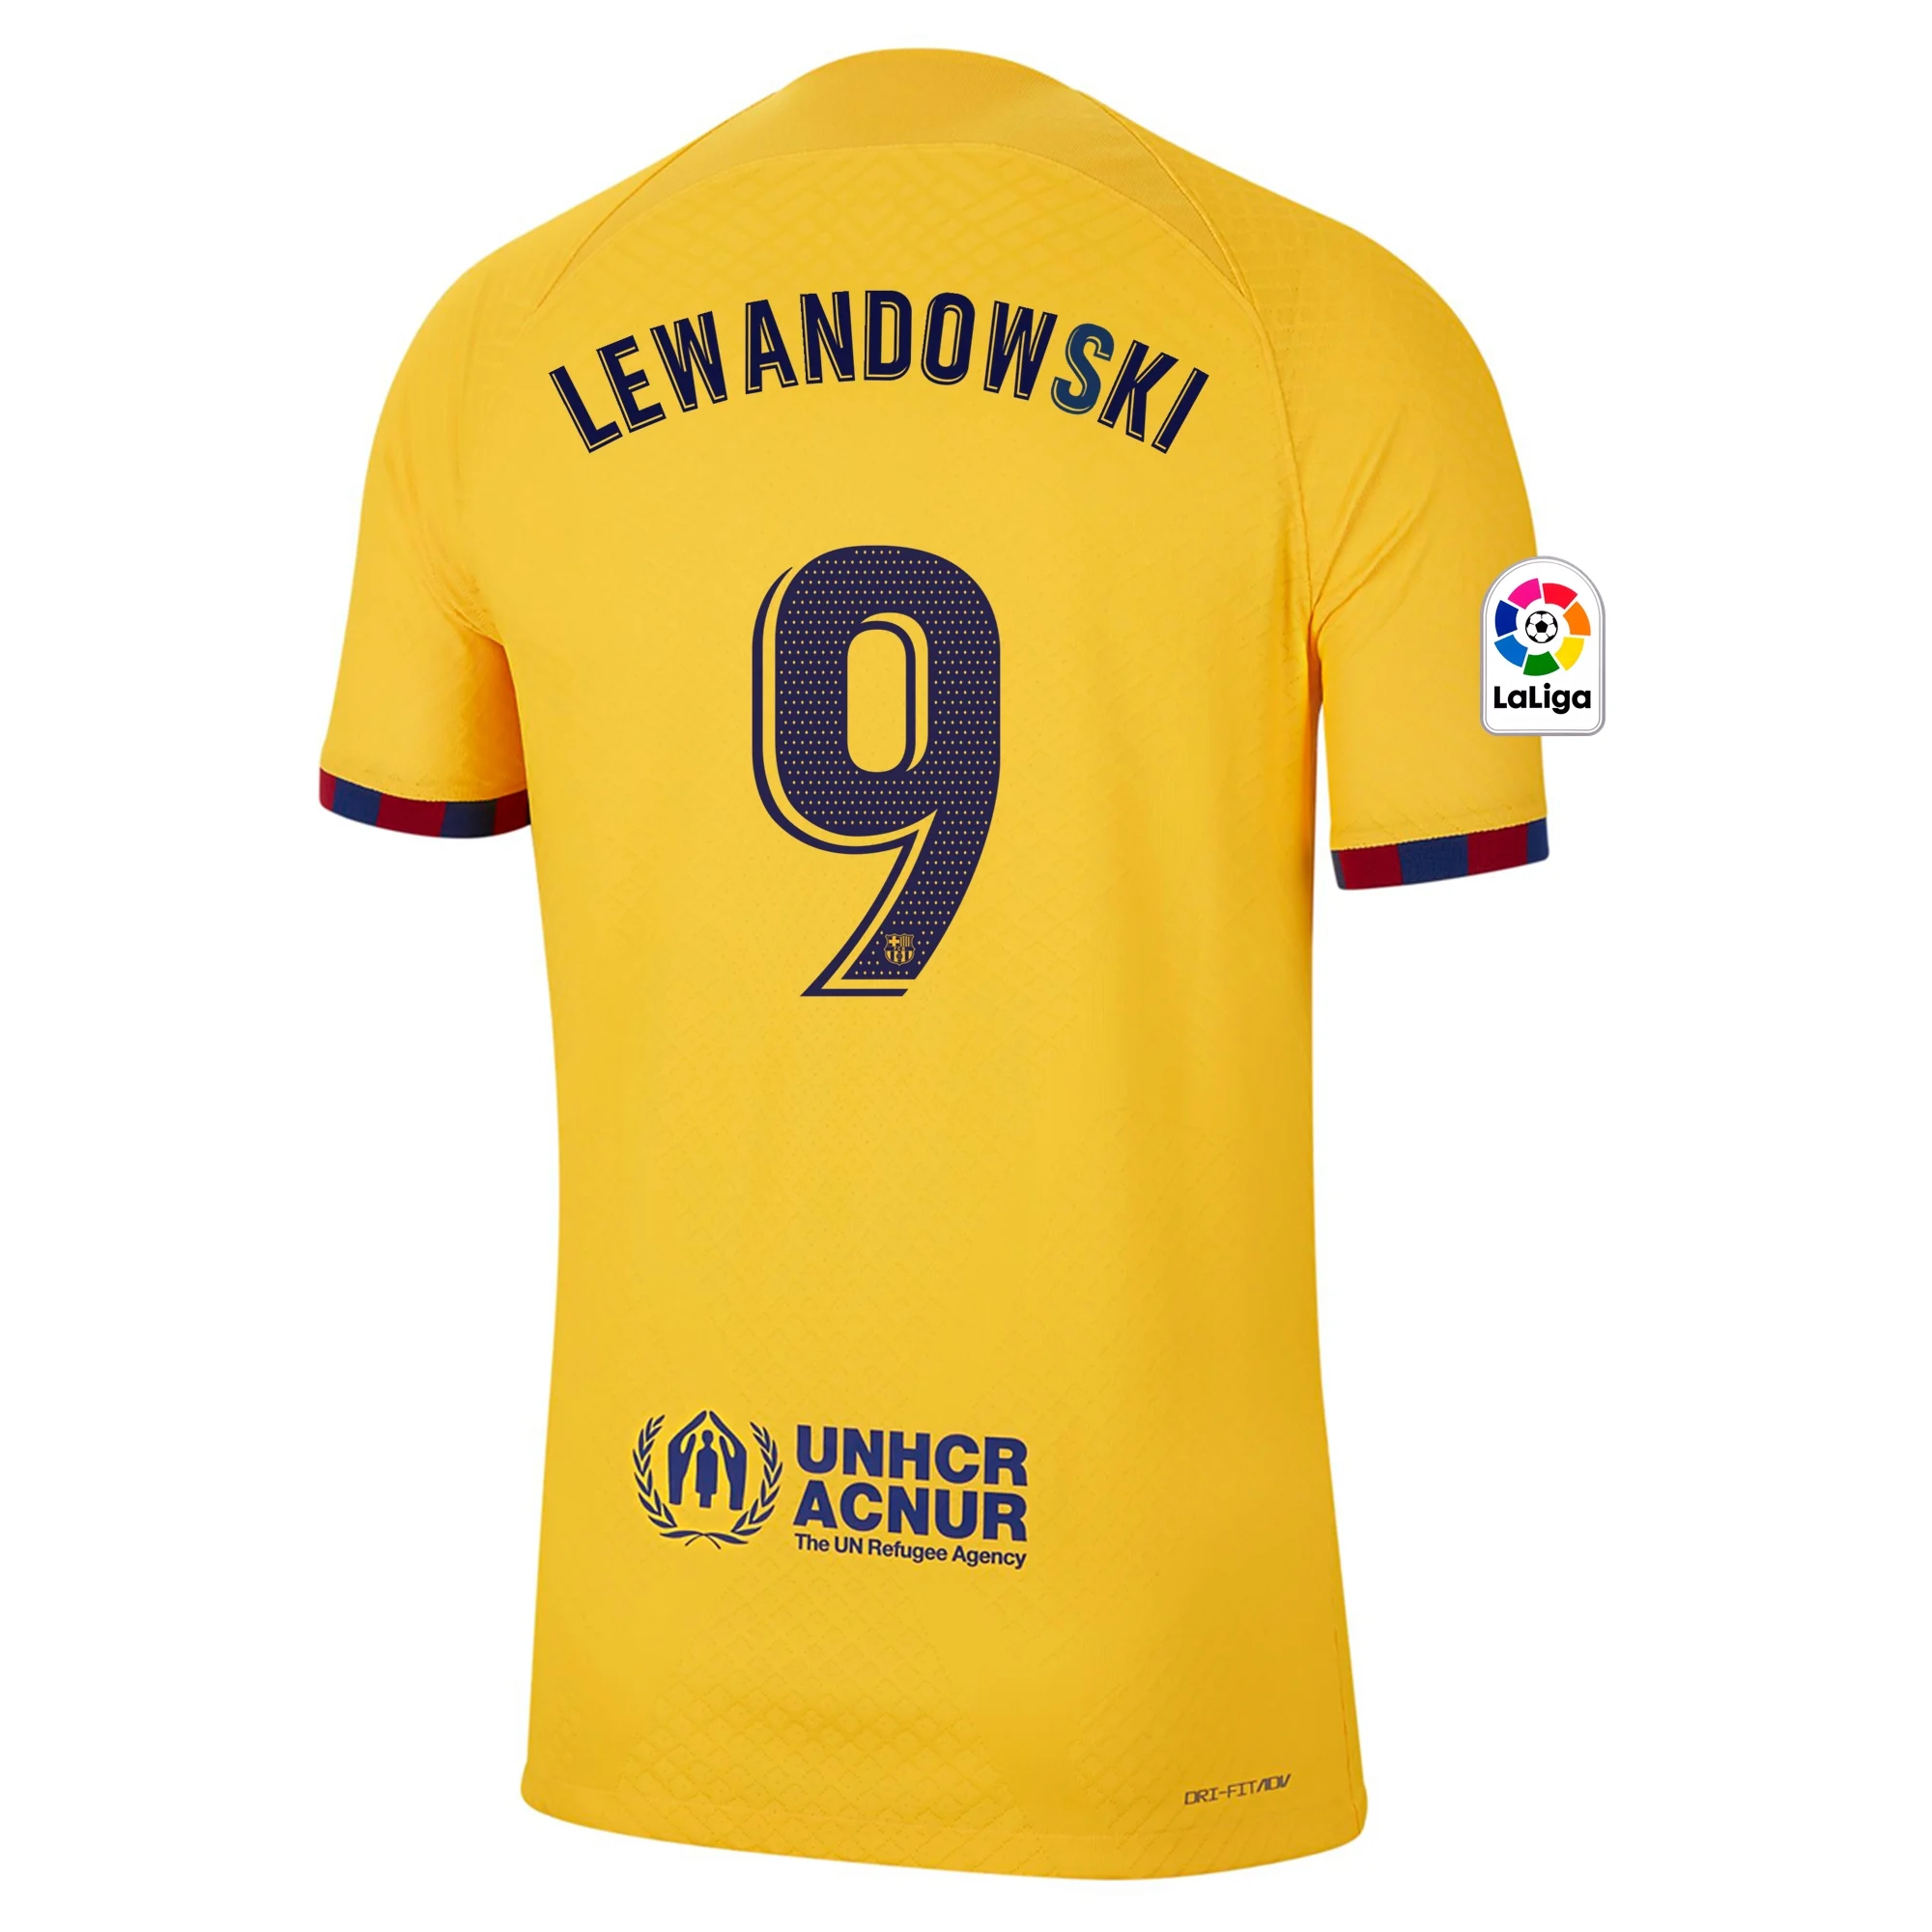 robert lewandowski barcelona jersey